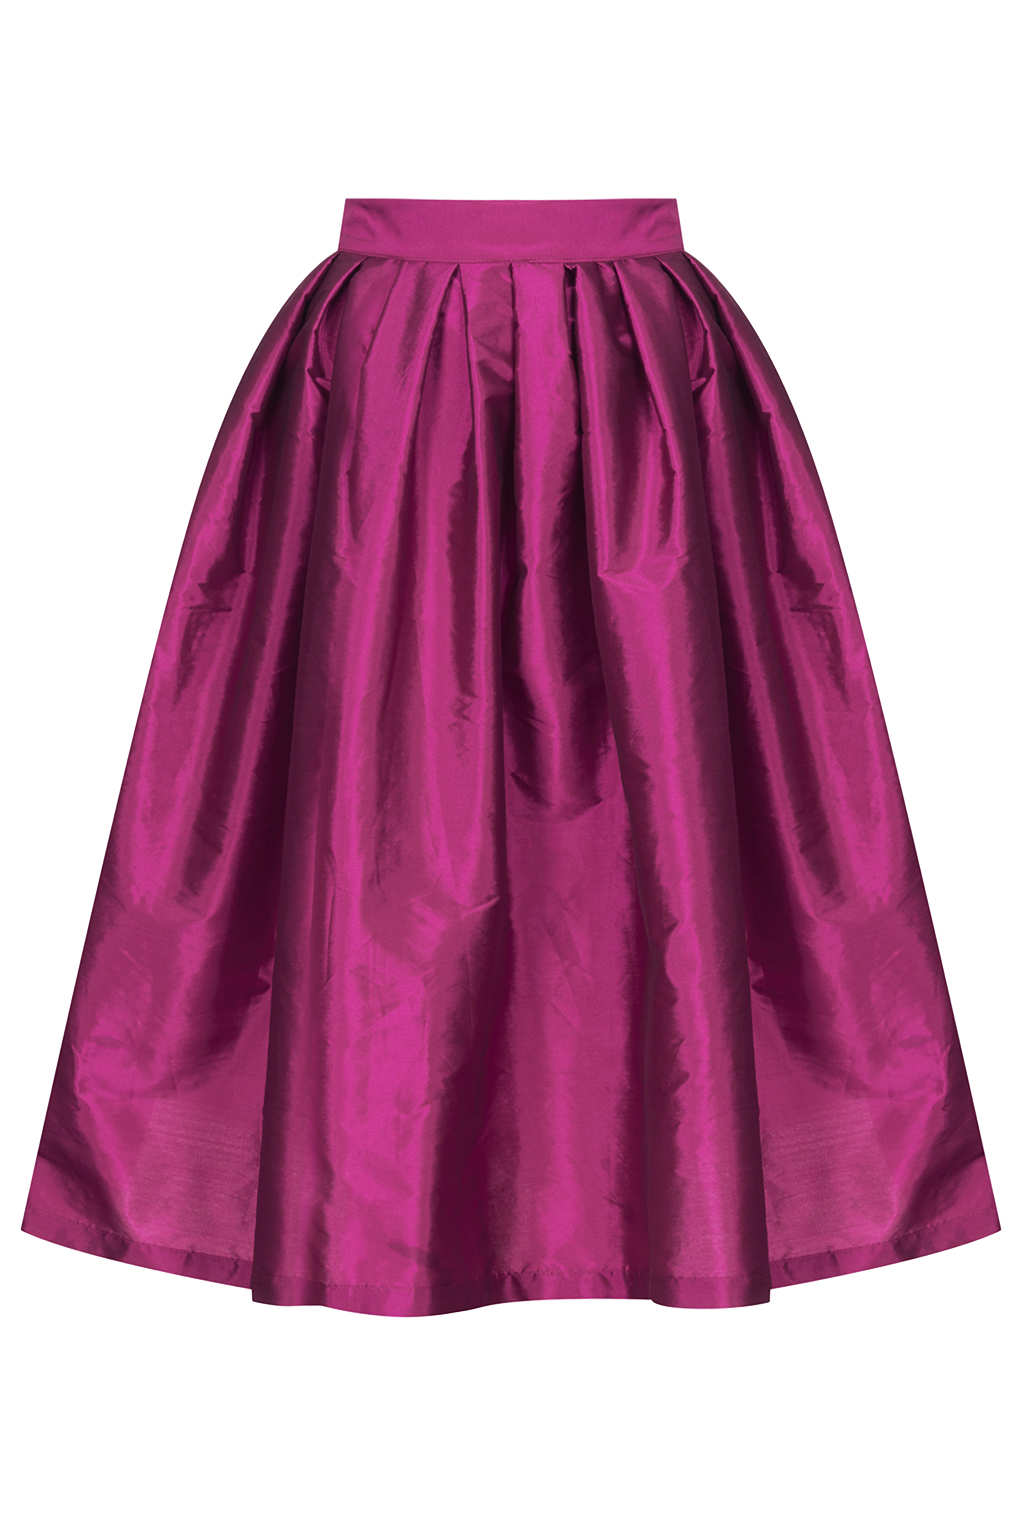 Lyst - Topshop Tafetta Midi Skirt in Pink